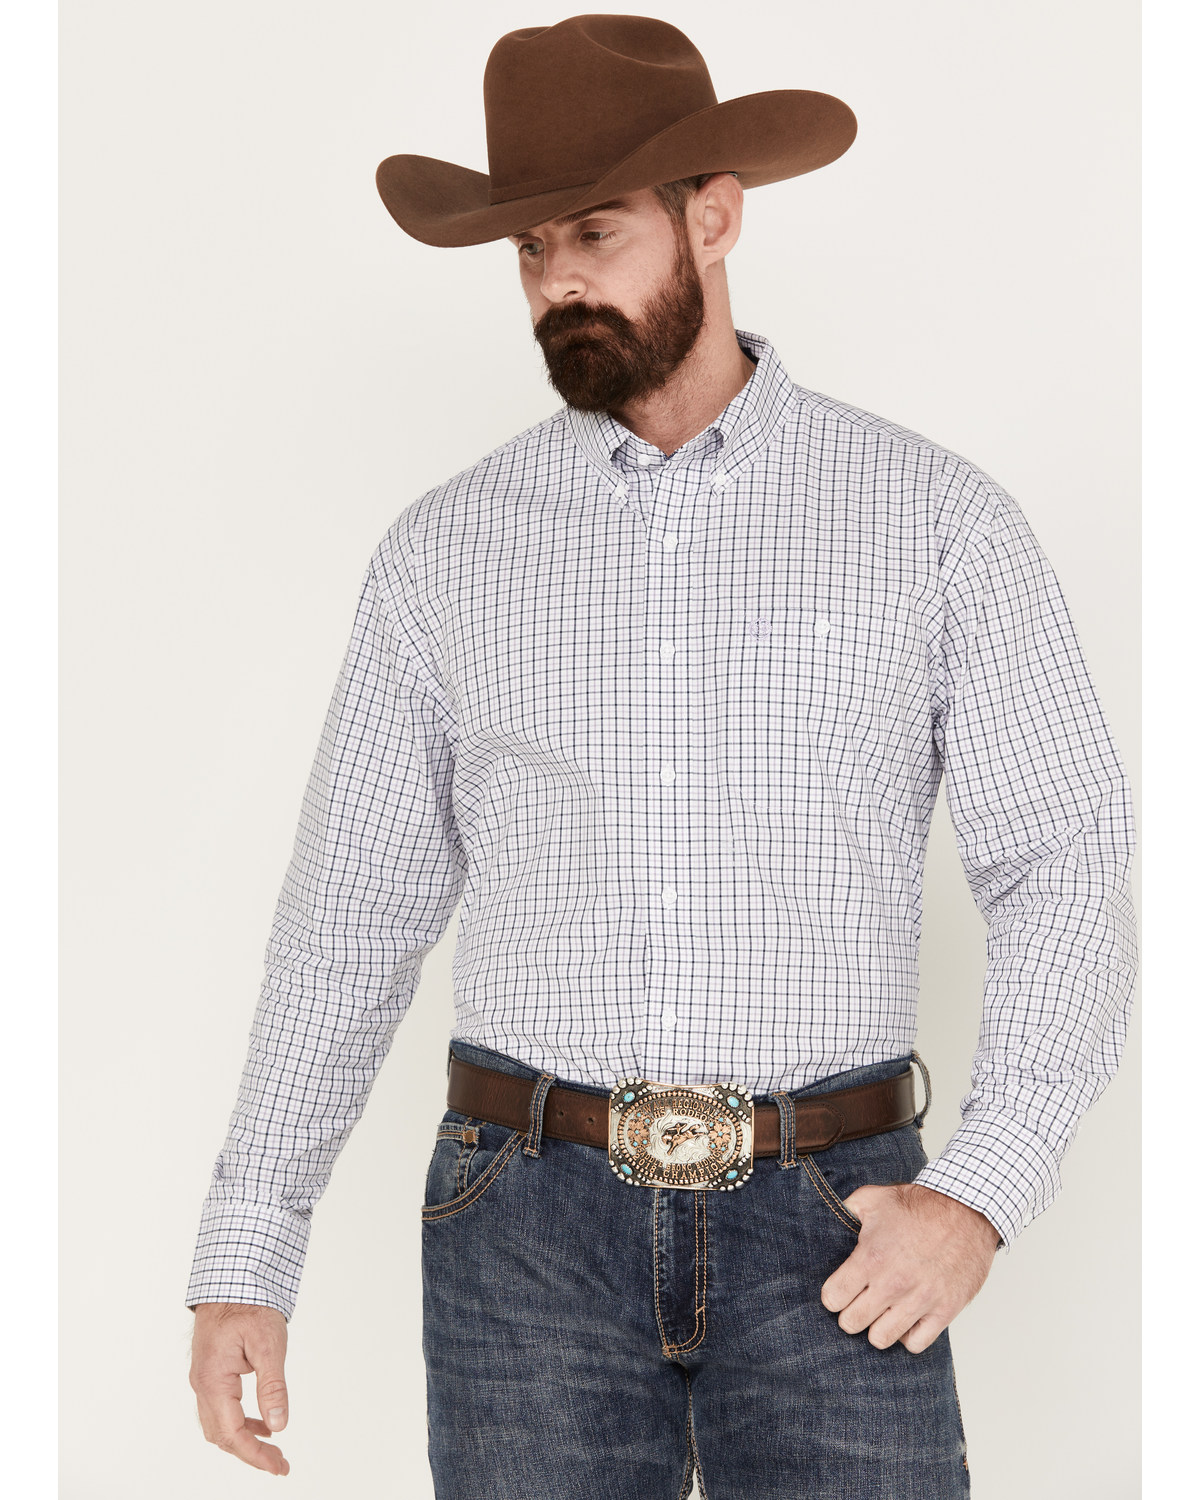 George Straight by Wrangler Men's Plaid Print Long Sleeve Button Down Western Shirt - Big & Tall